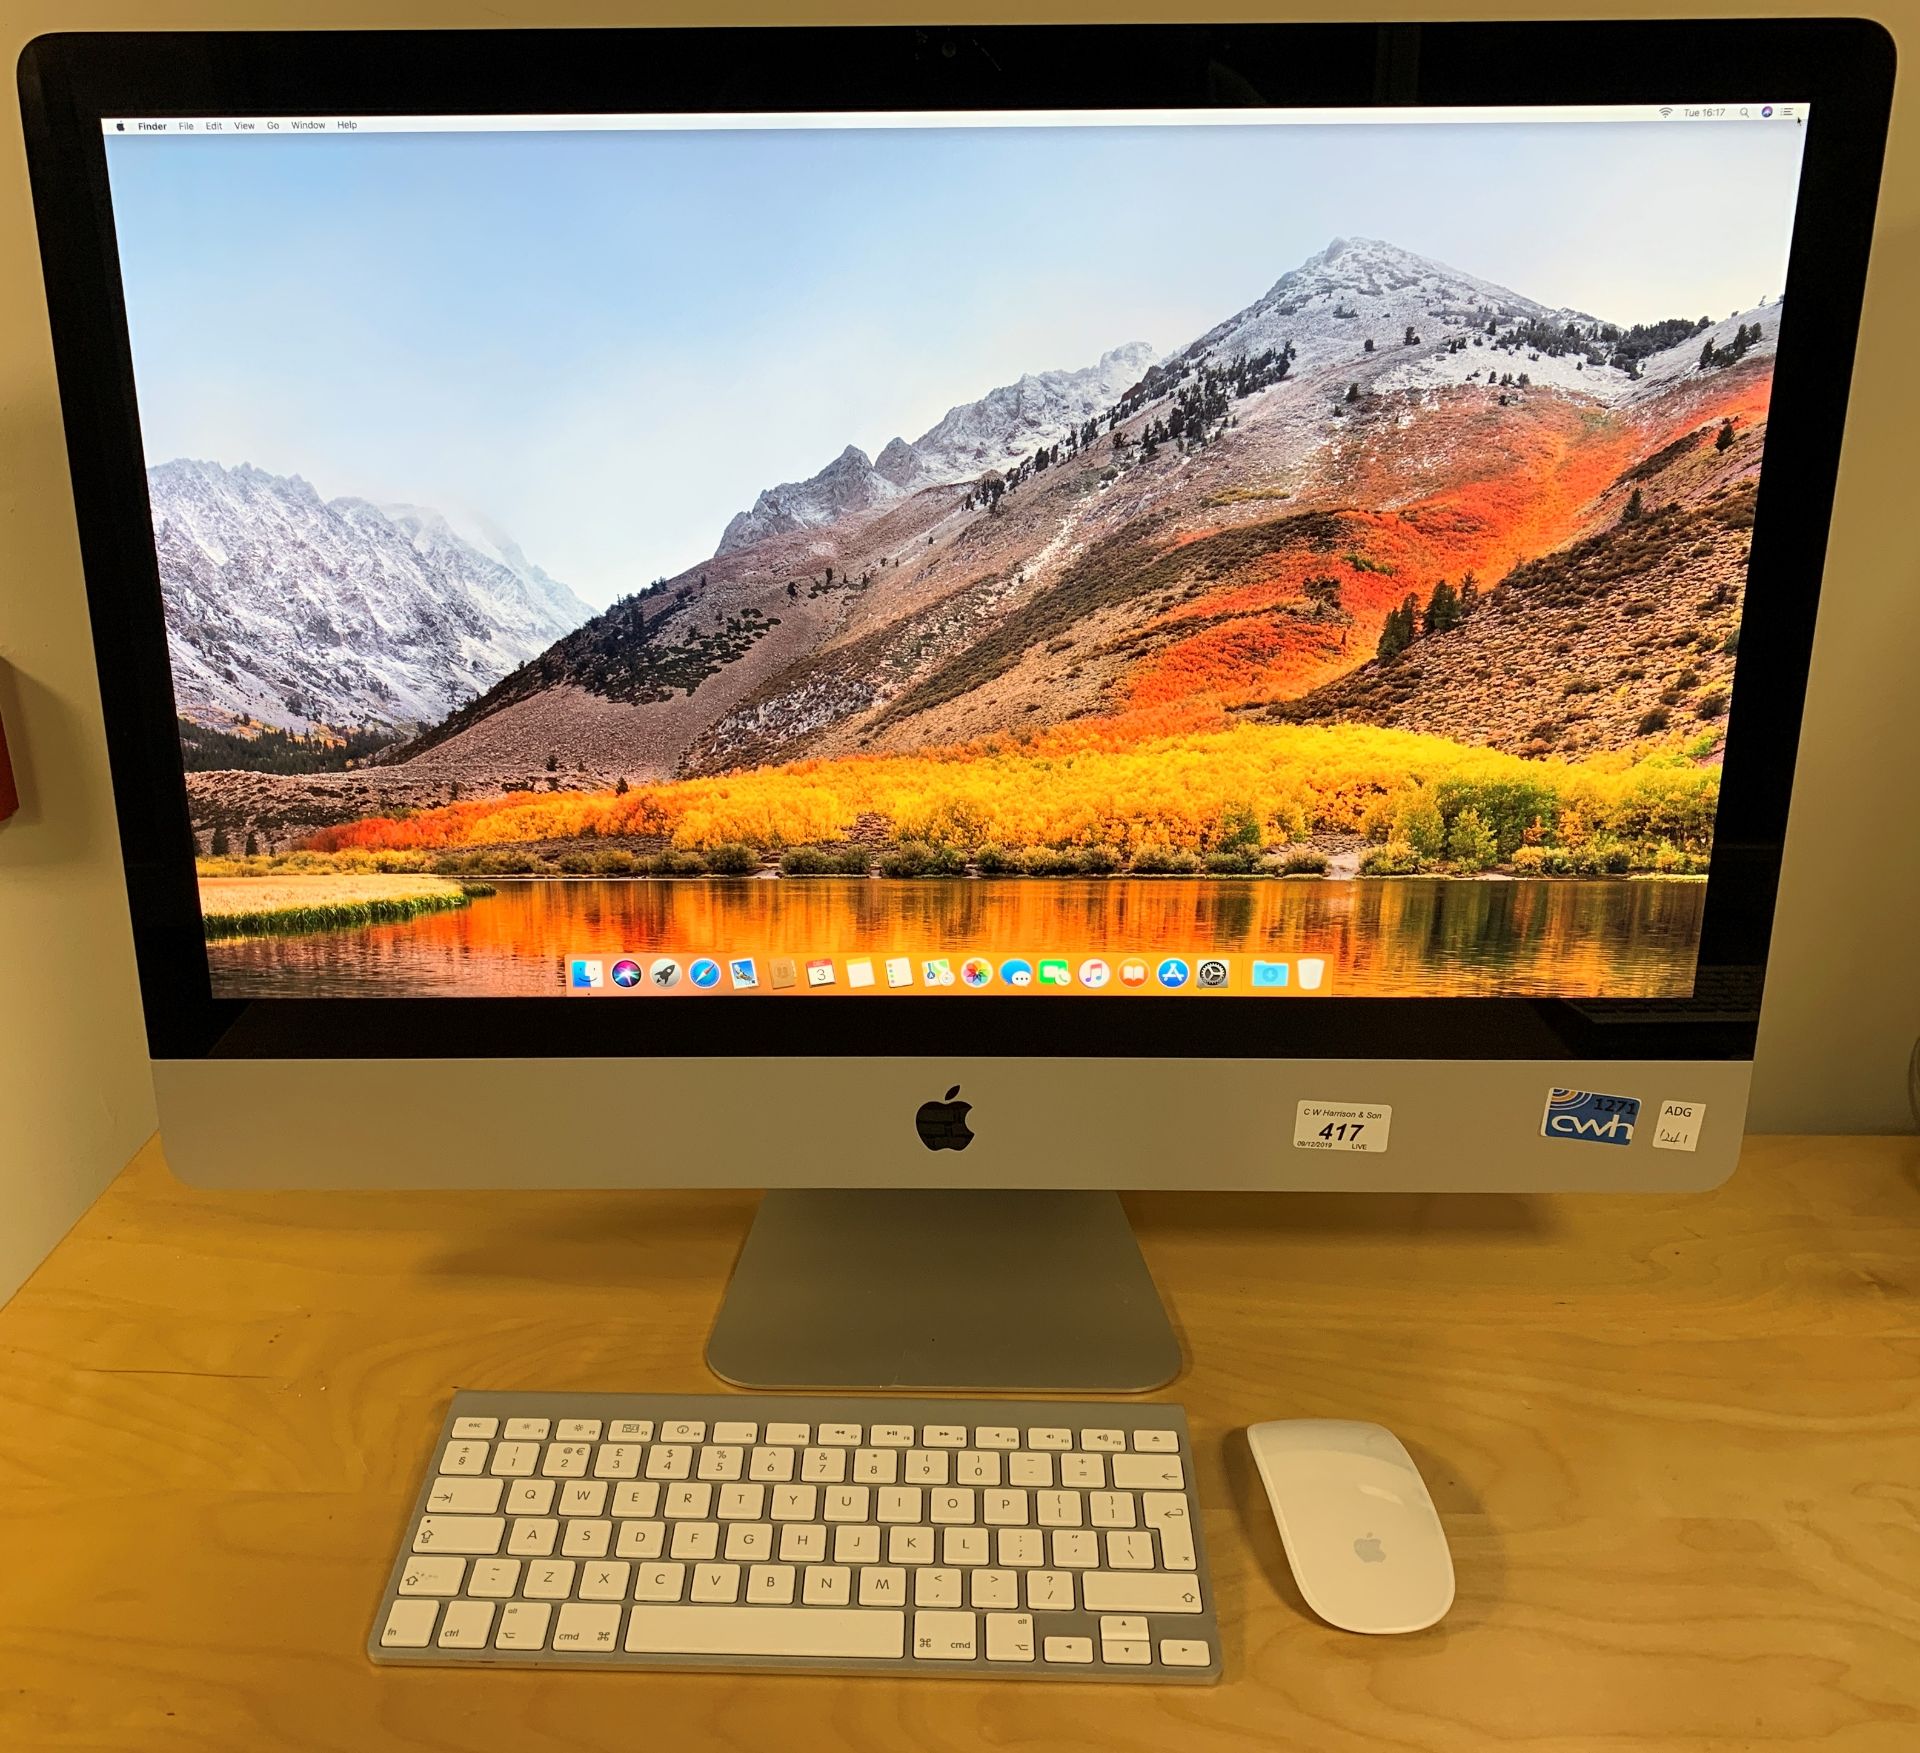 Apple iMac model EMC2309, serial no.